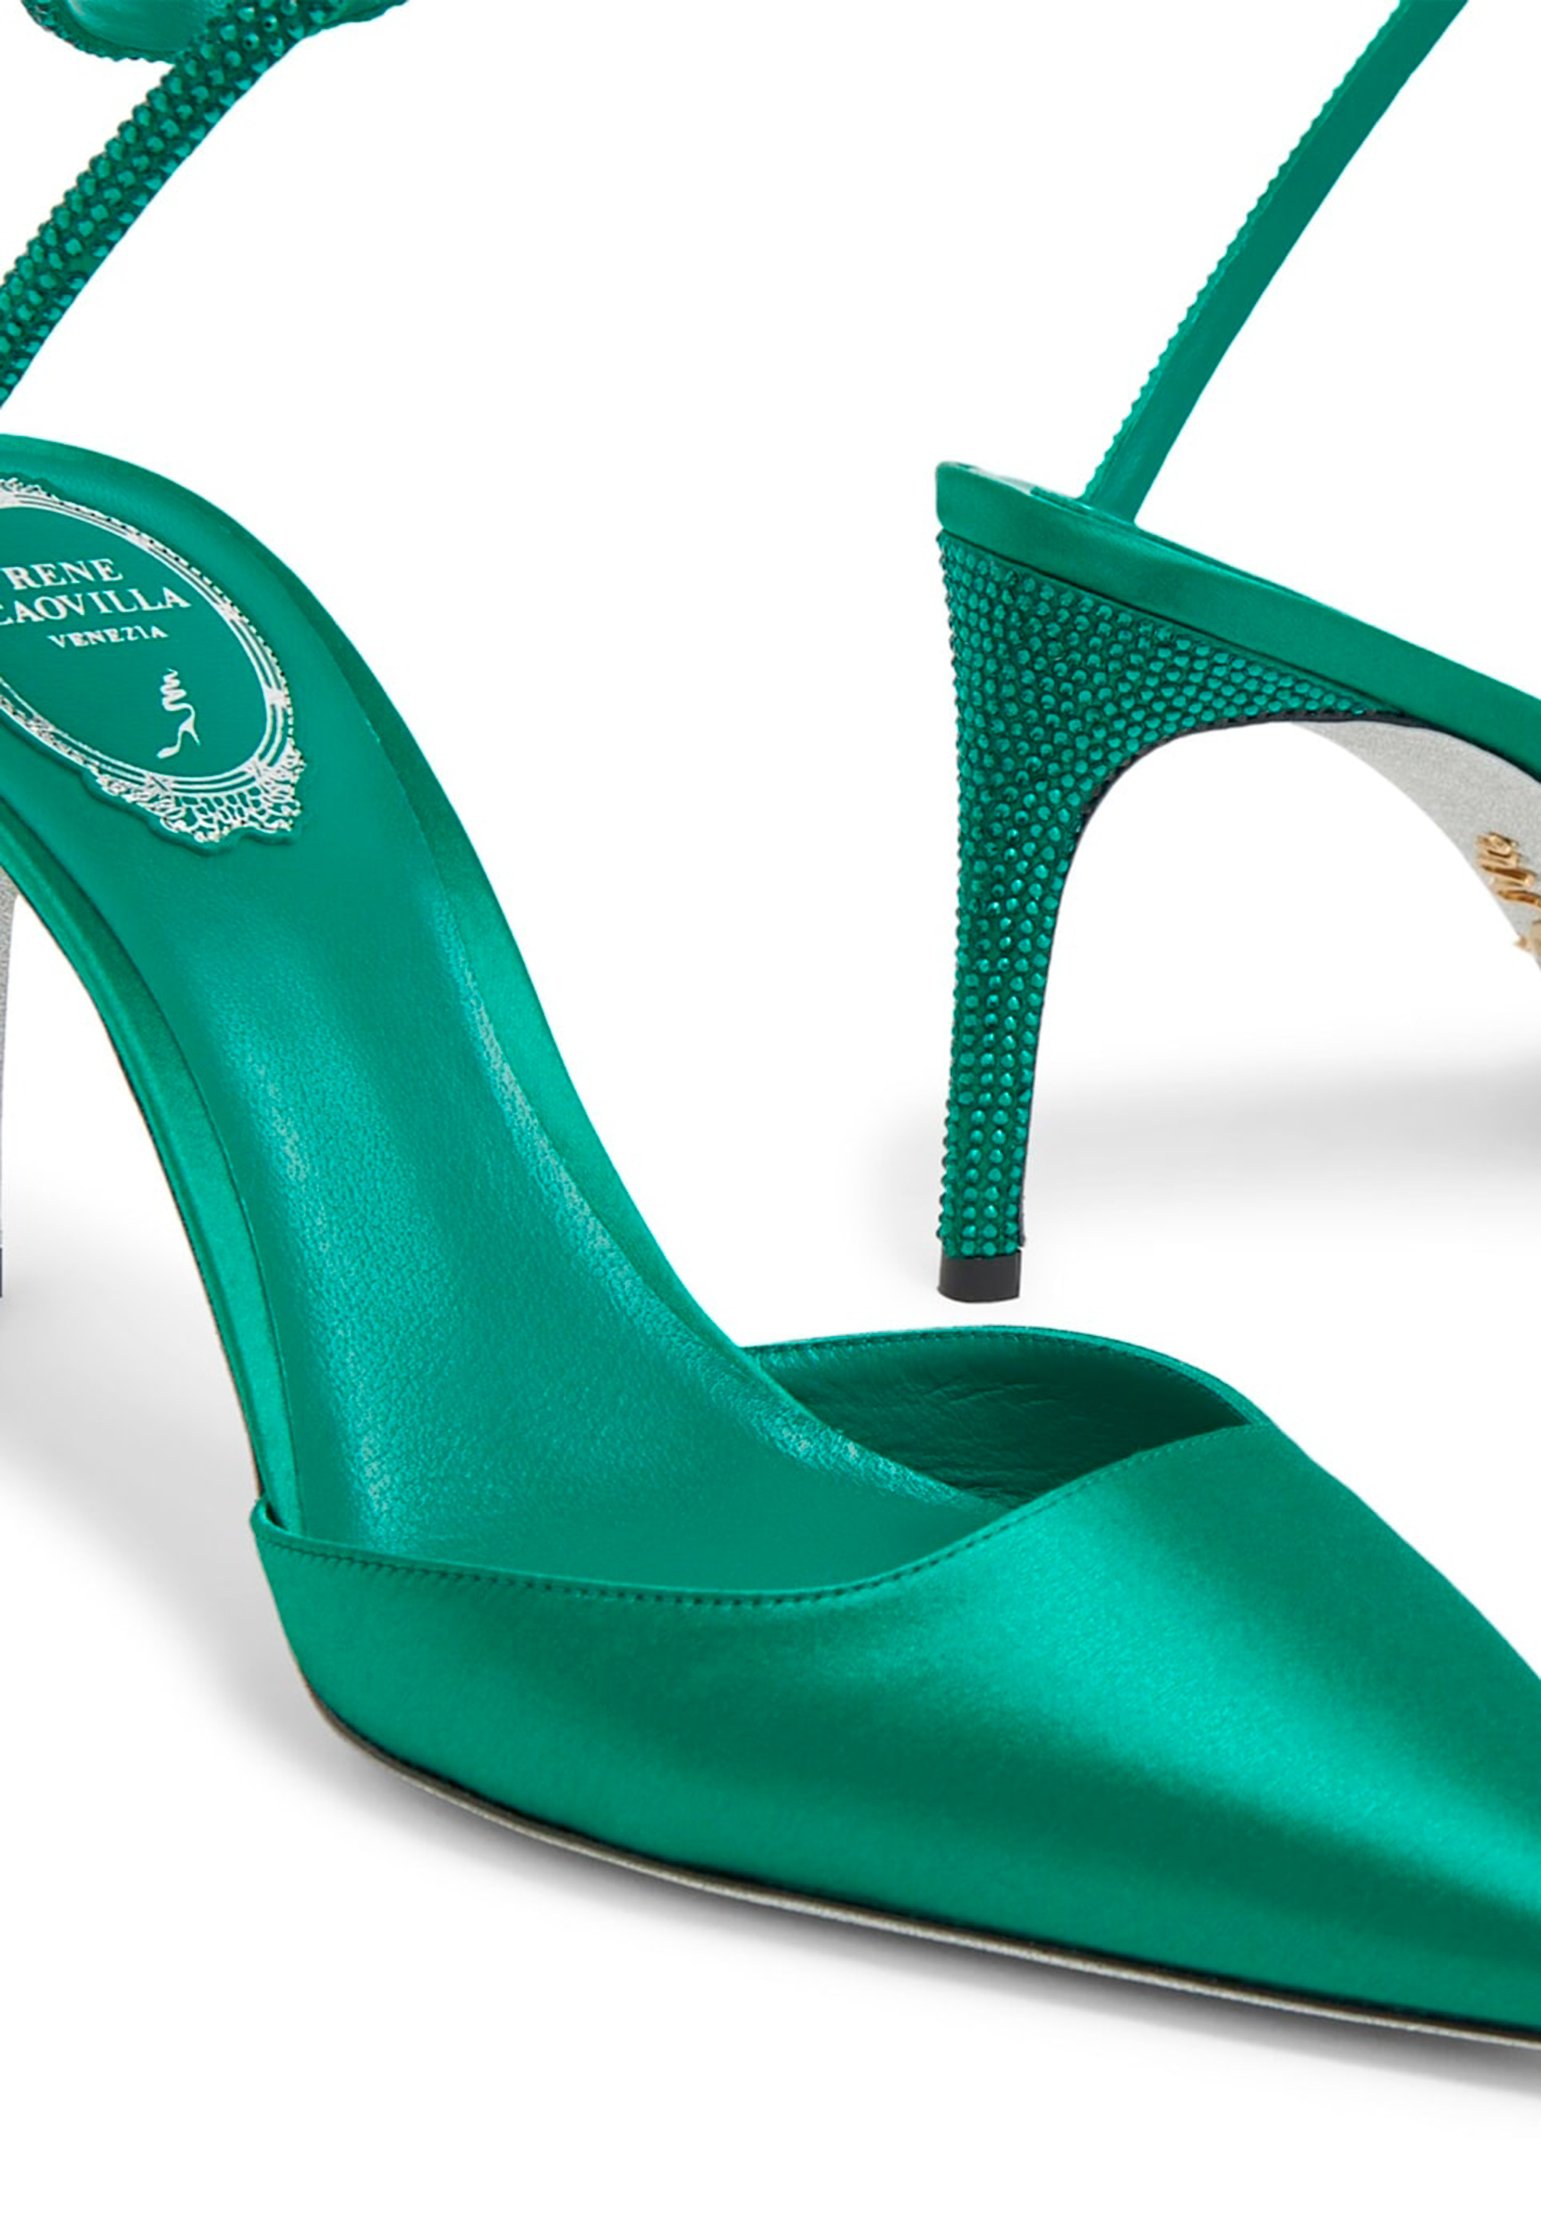 Shoes RENE CAOVILLA Color: green (Code: 2372) in online store Allure